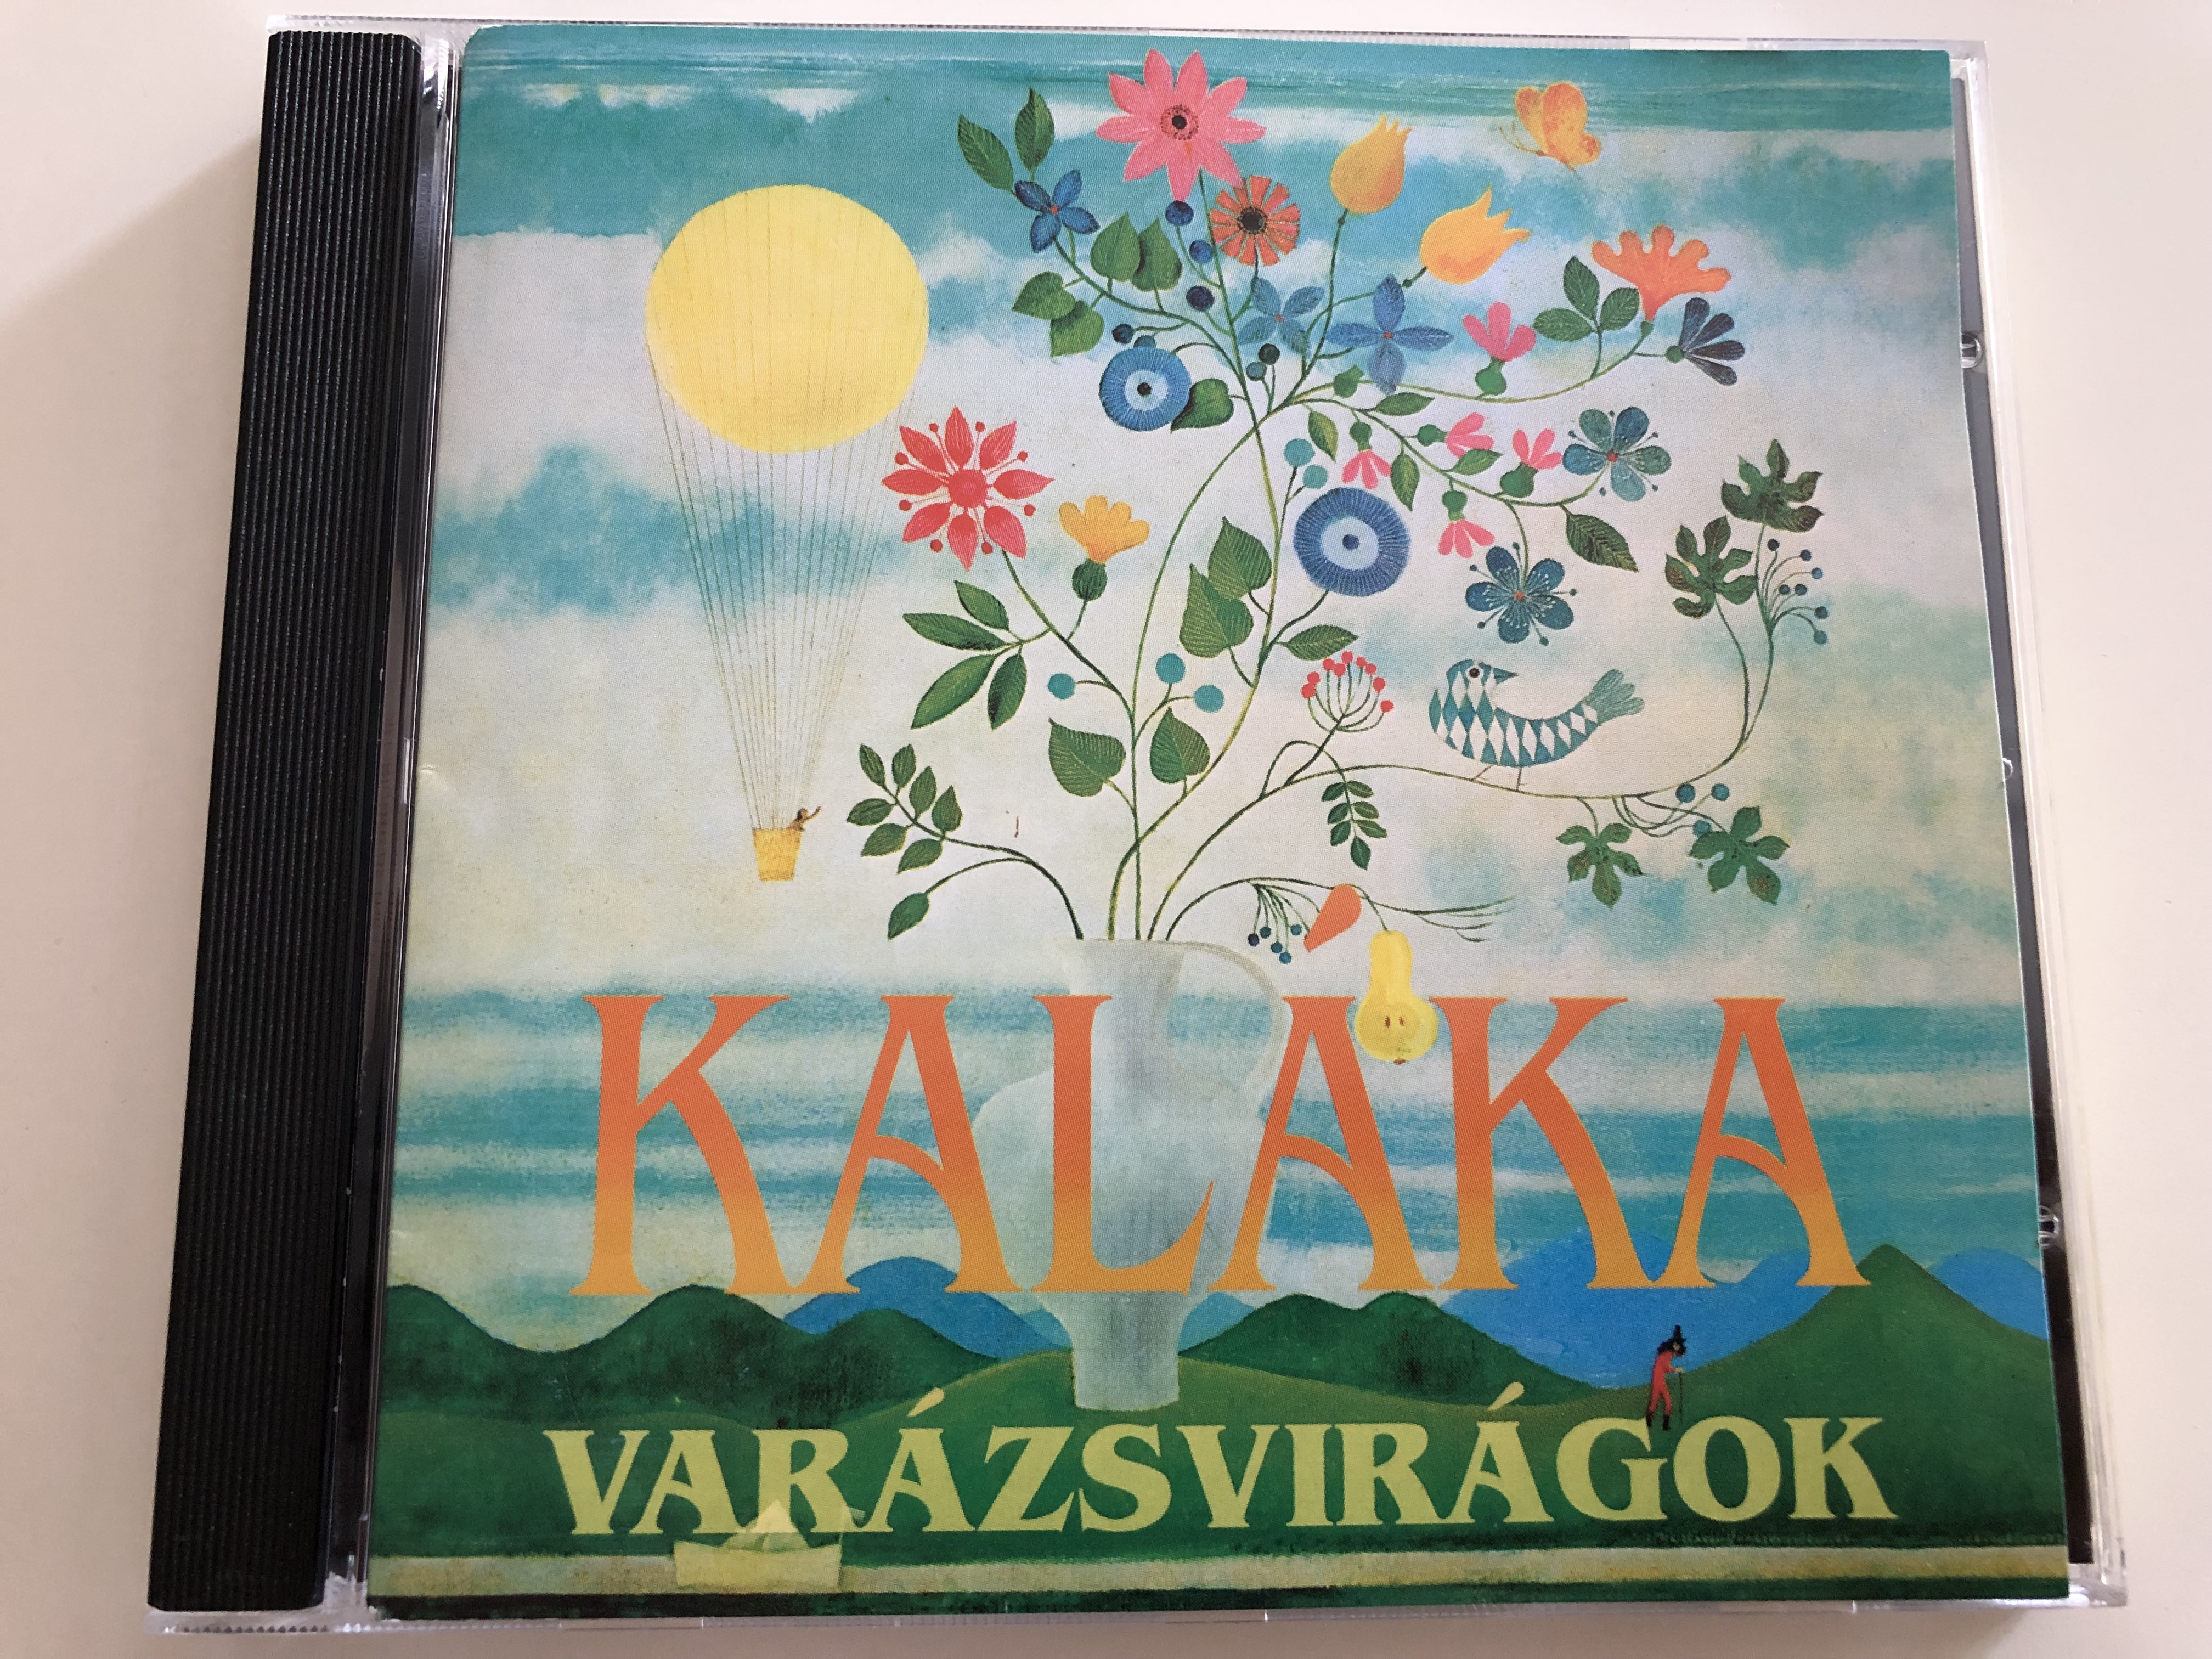 kal-ka-var-zsvir-gok-1971-s-1979-k-z-tt-k-sz-lt-felv-telek-gryllus-magyar-r-di-recordings-1971-1979-audio-cd-1998-gcd-008-1-.jpg